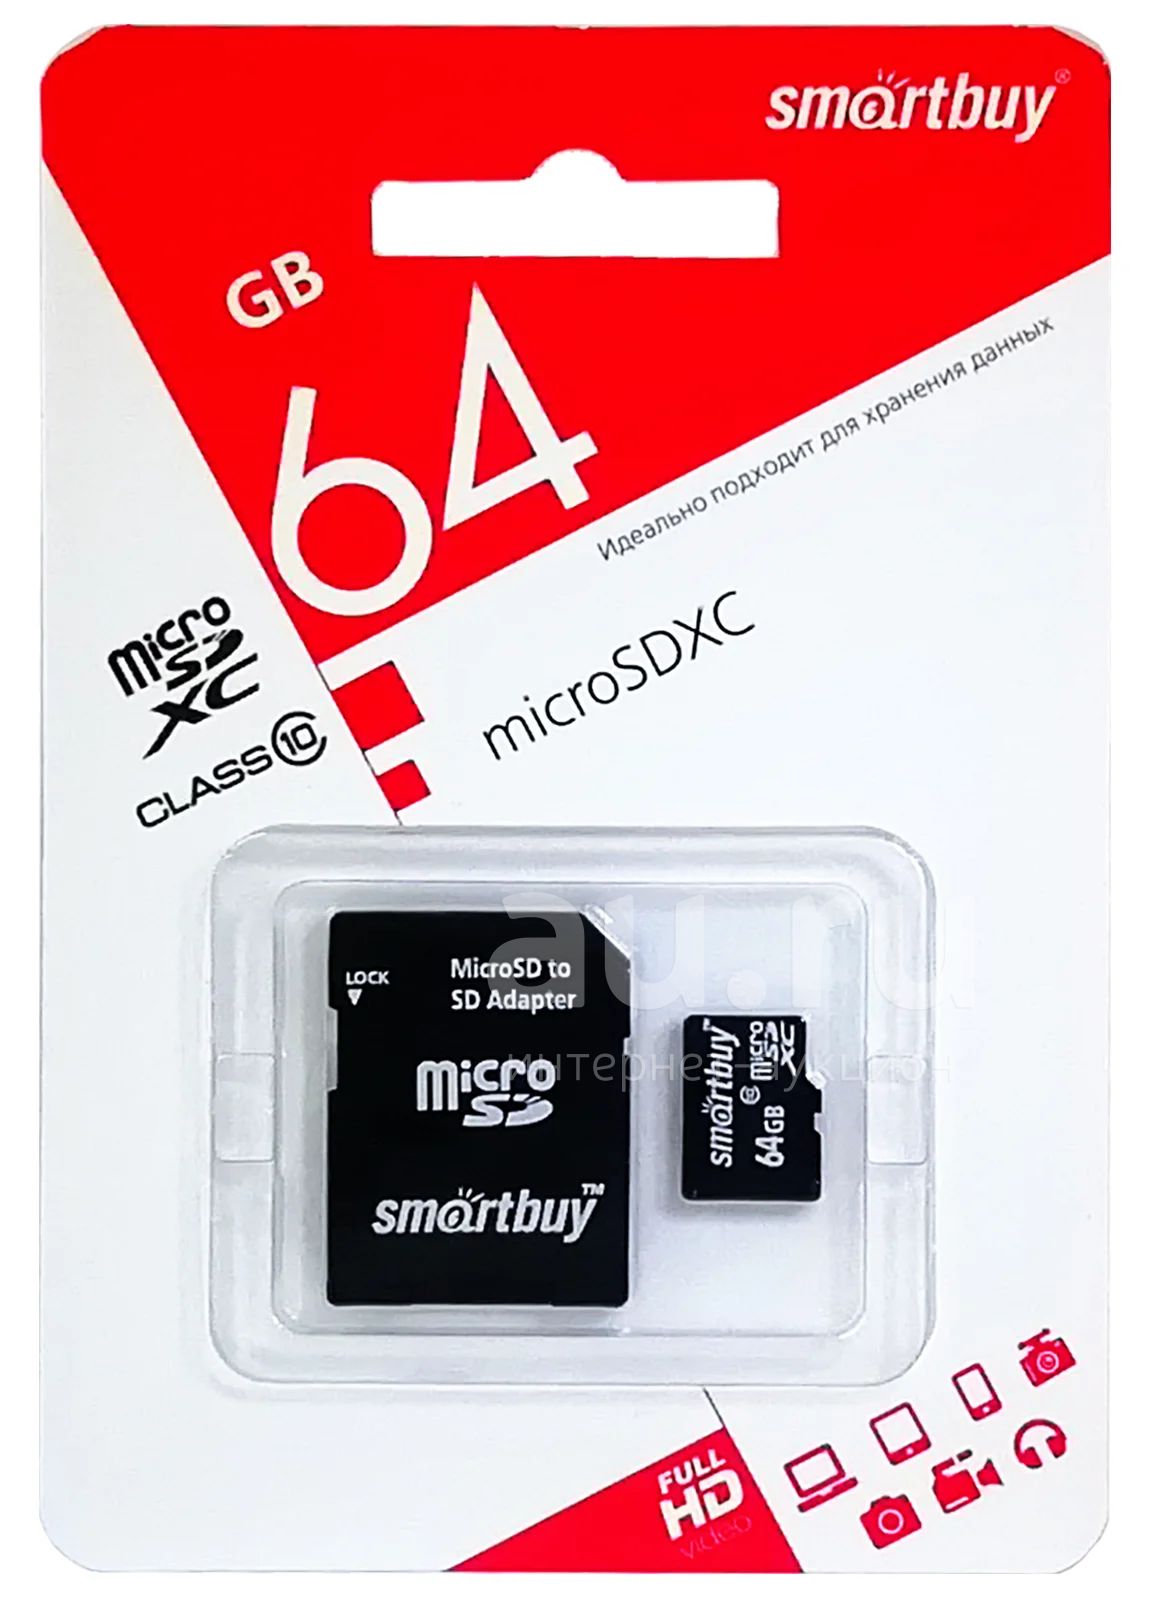 Microsdhc 1. Арта памяти MICROSD 16gb Smart buy class 10 + SD адаптер. SD 32gb SMARTBUY class 10. Микро СД SMARTBUY 16gb. MICROSDHC 32gb SMARTBUY.